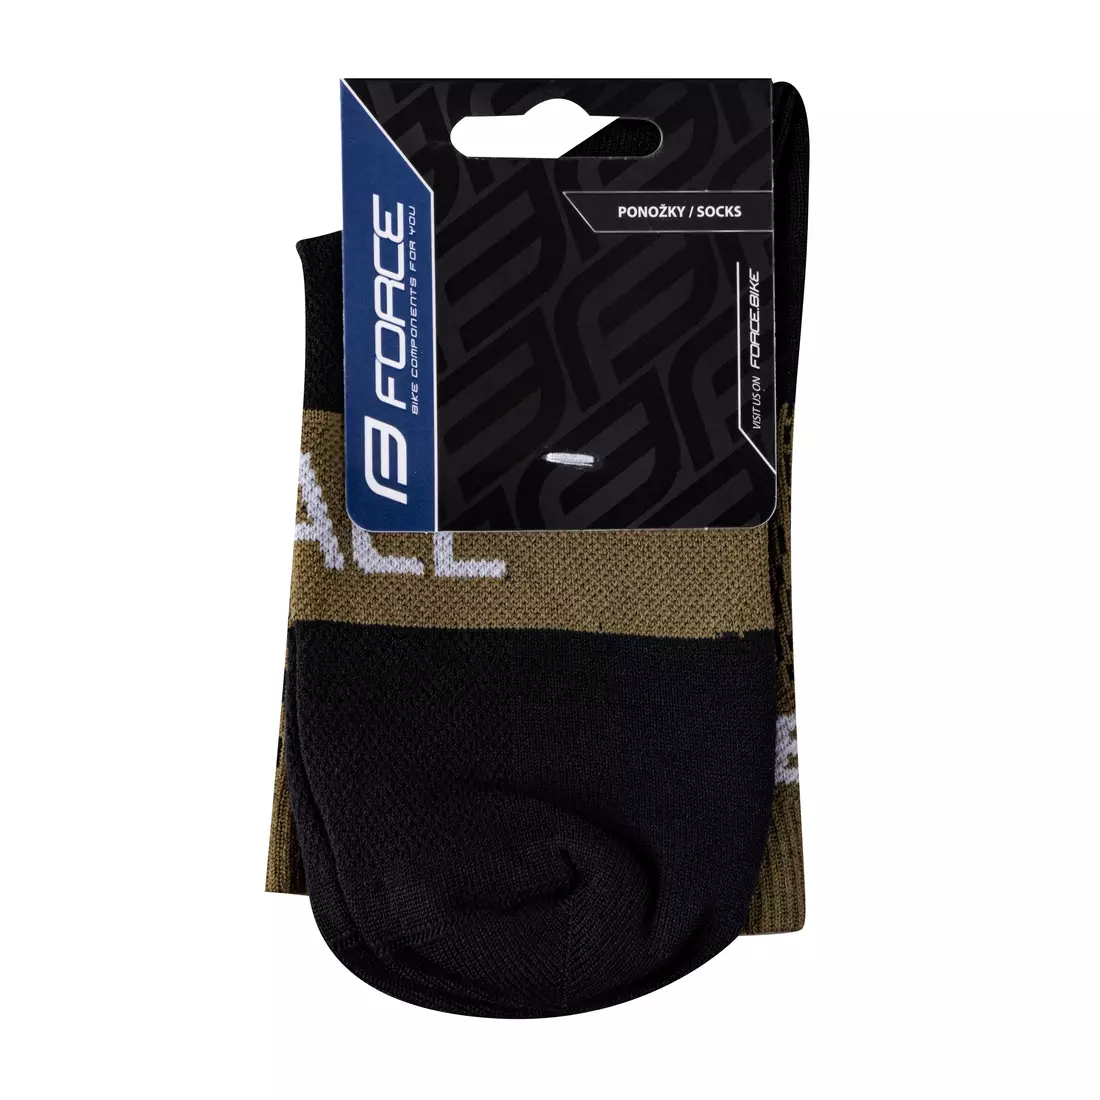 FORCE Cycling socks / sport socks TRACE, green-black, 9008871